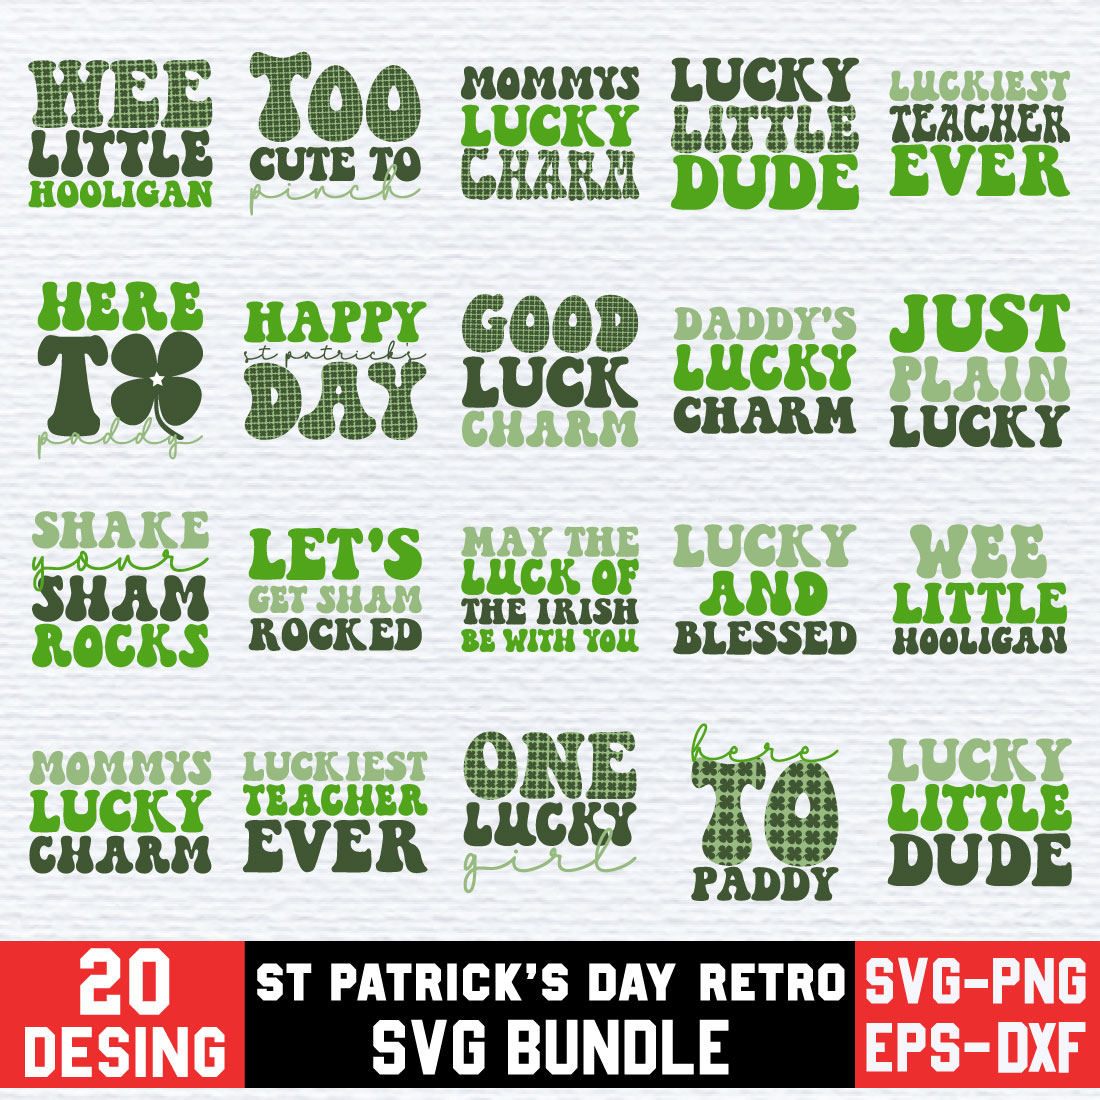 St Patrick's Day retro Svg Bundle cover image.